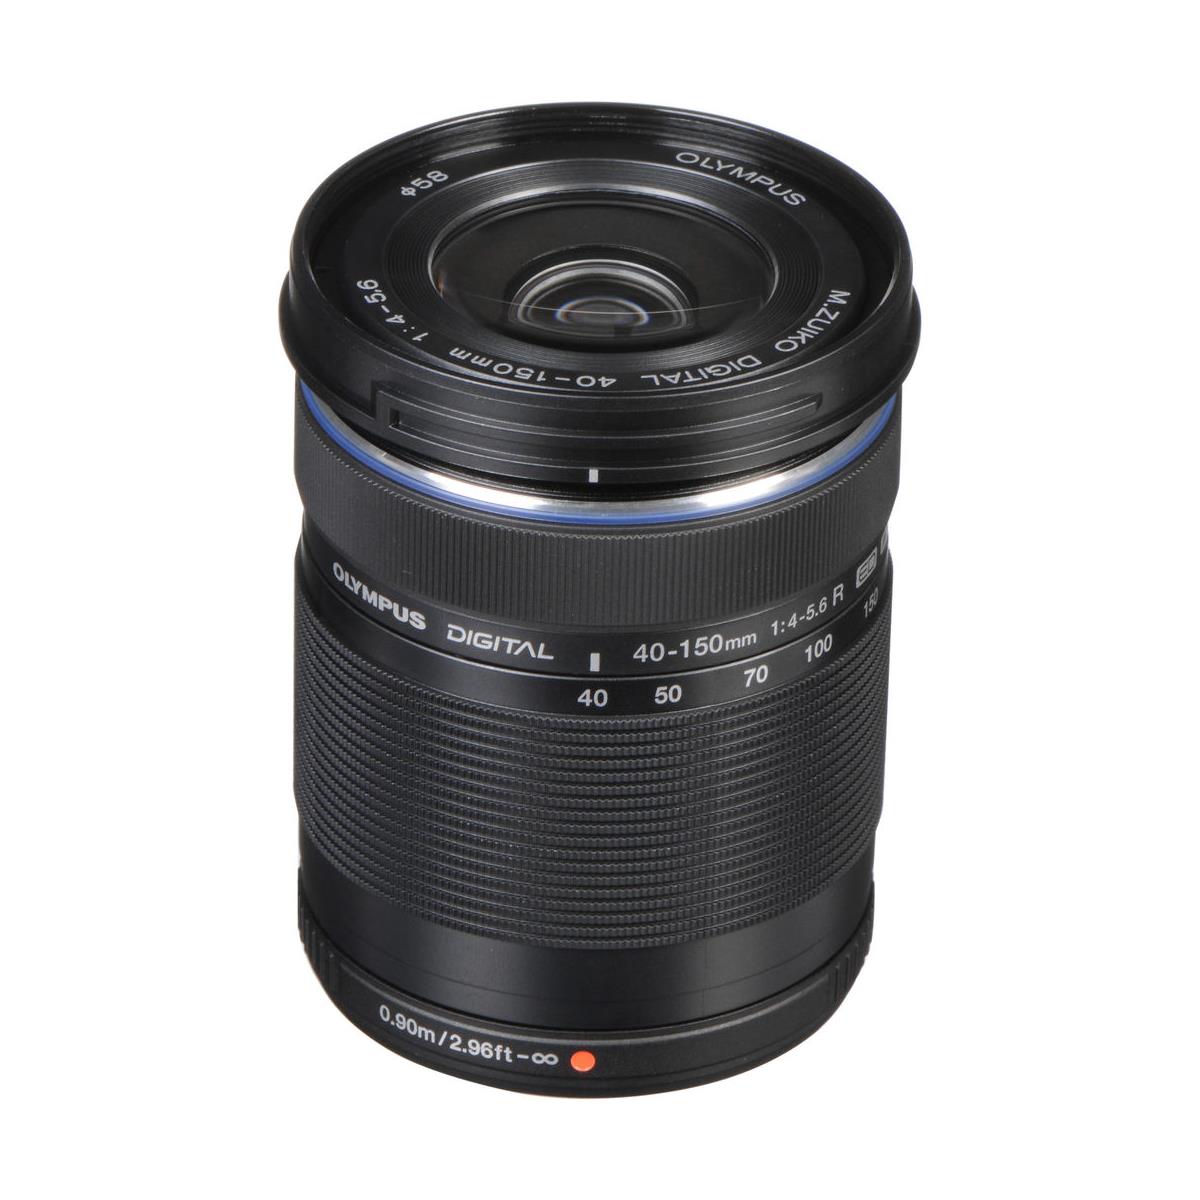 Olympus 40-150mm F4.0-5.6 R ED M.Zuiko   Digital Lens (Black)